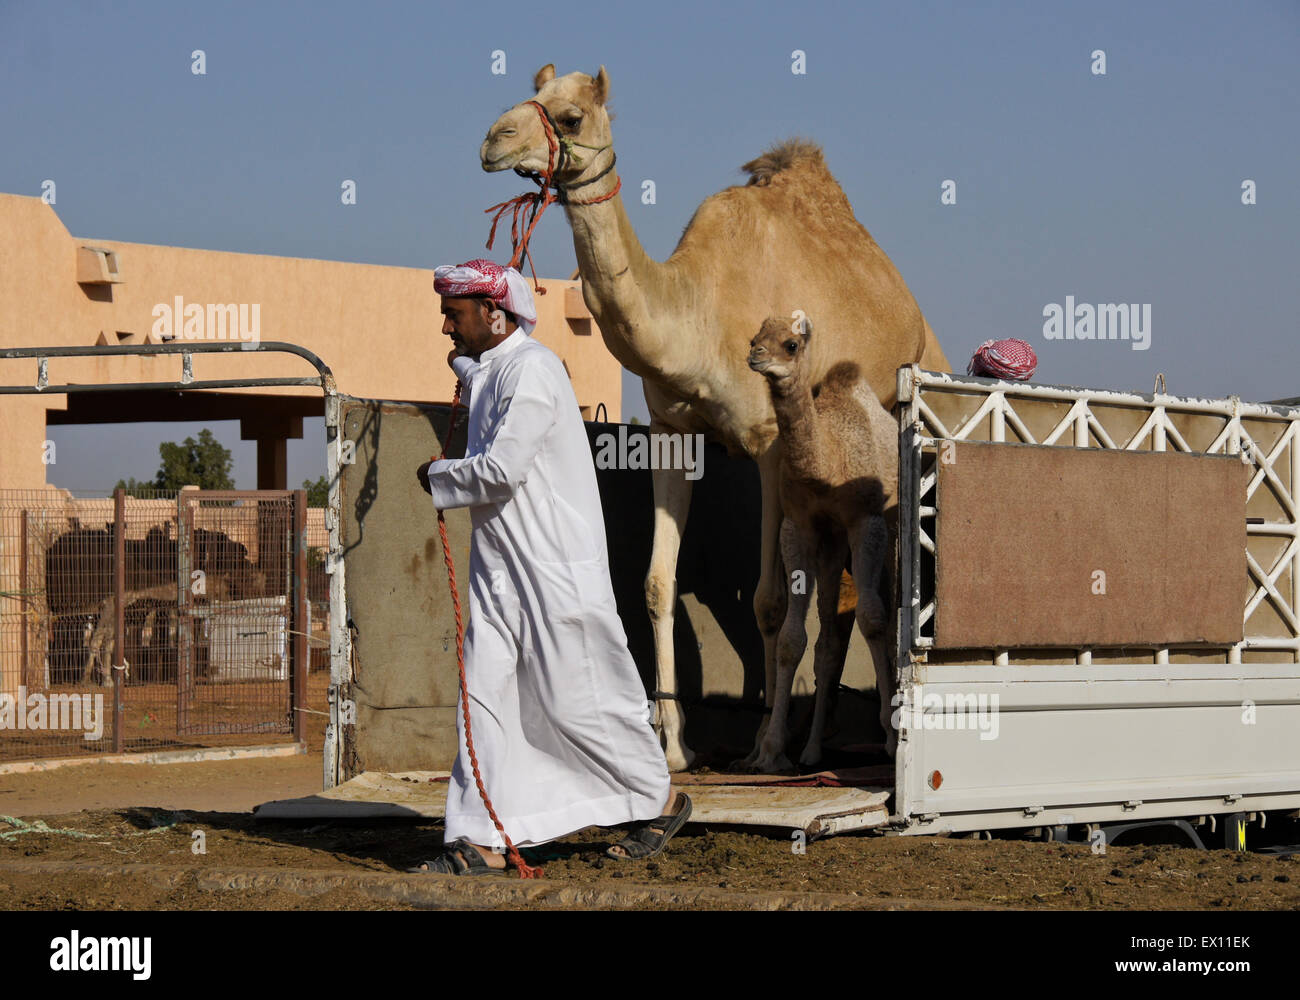 Men unloading camels from truck at camel market, Al-Ain, Abu Dhabi, United Arab Emirates Stock Photo